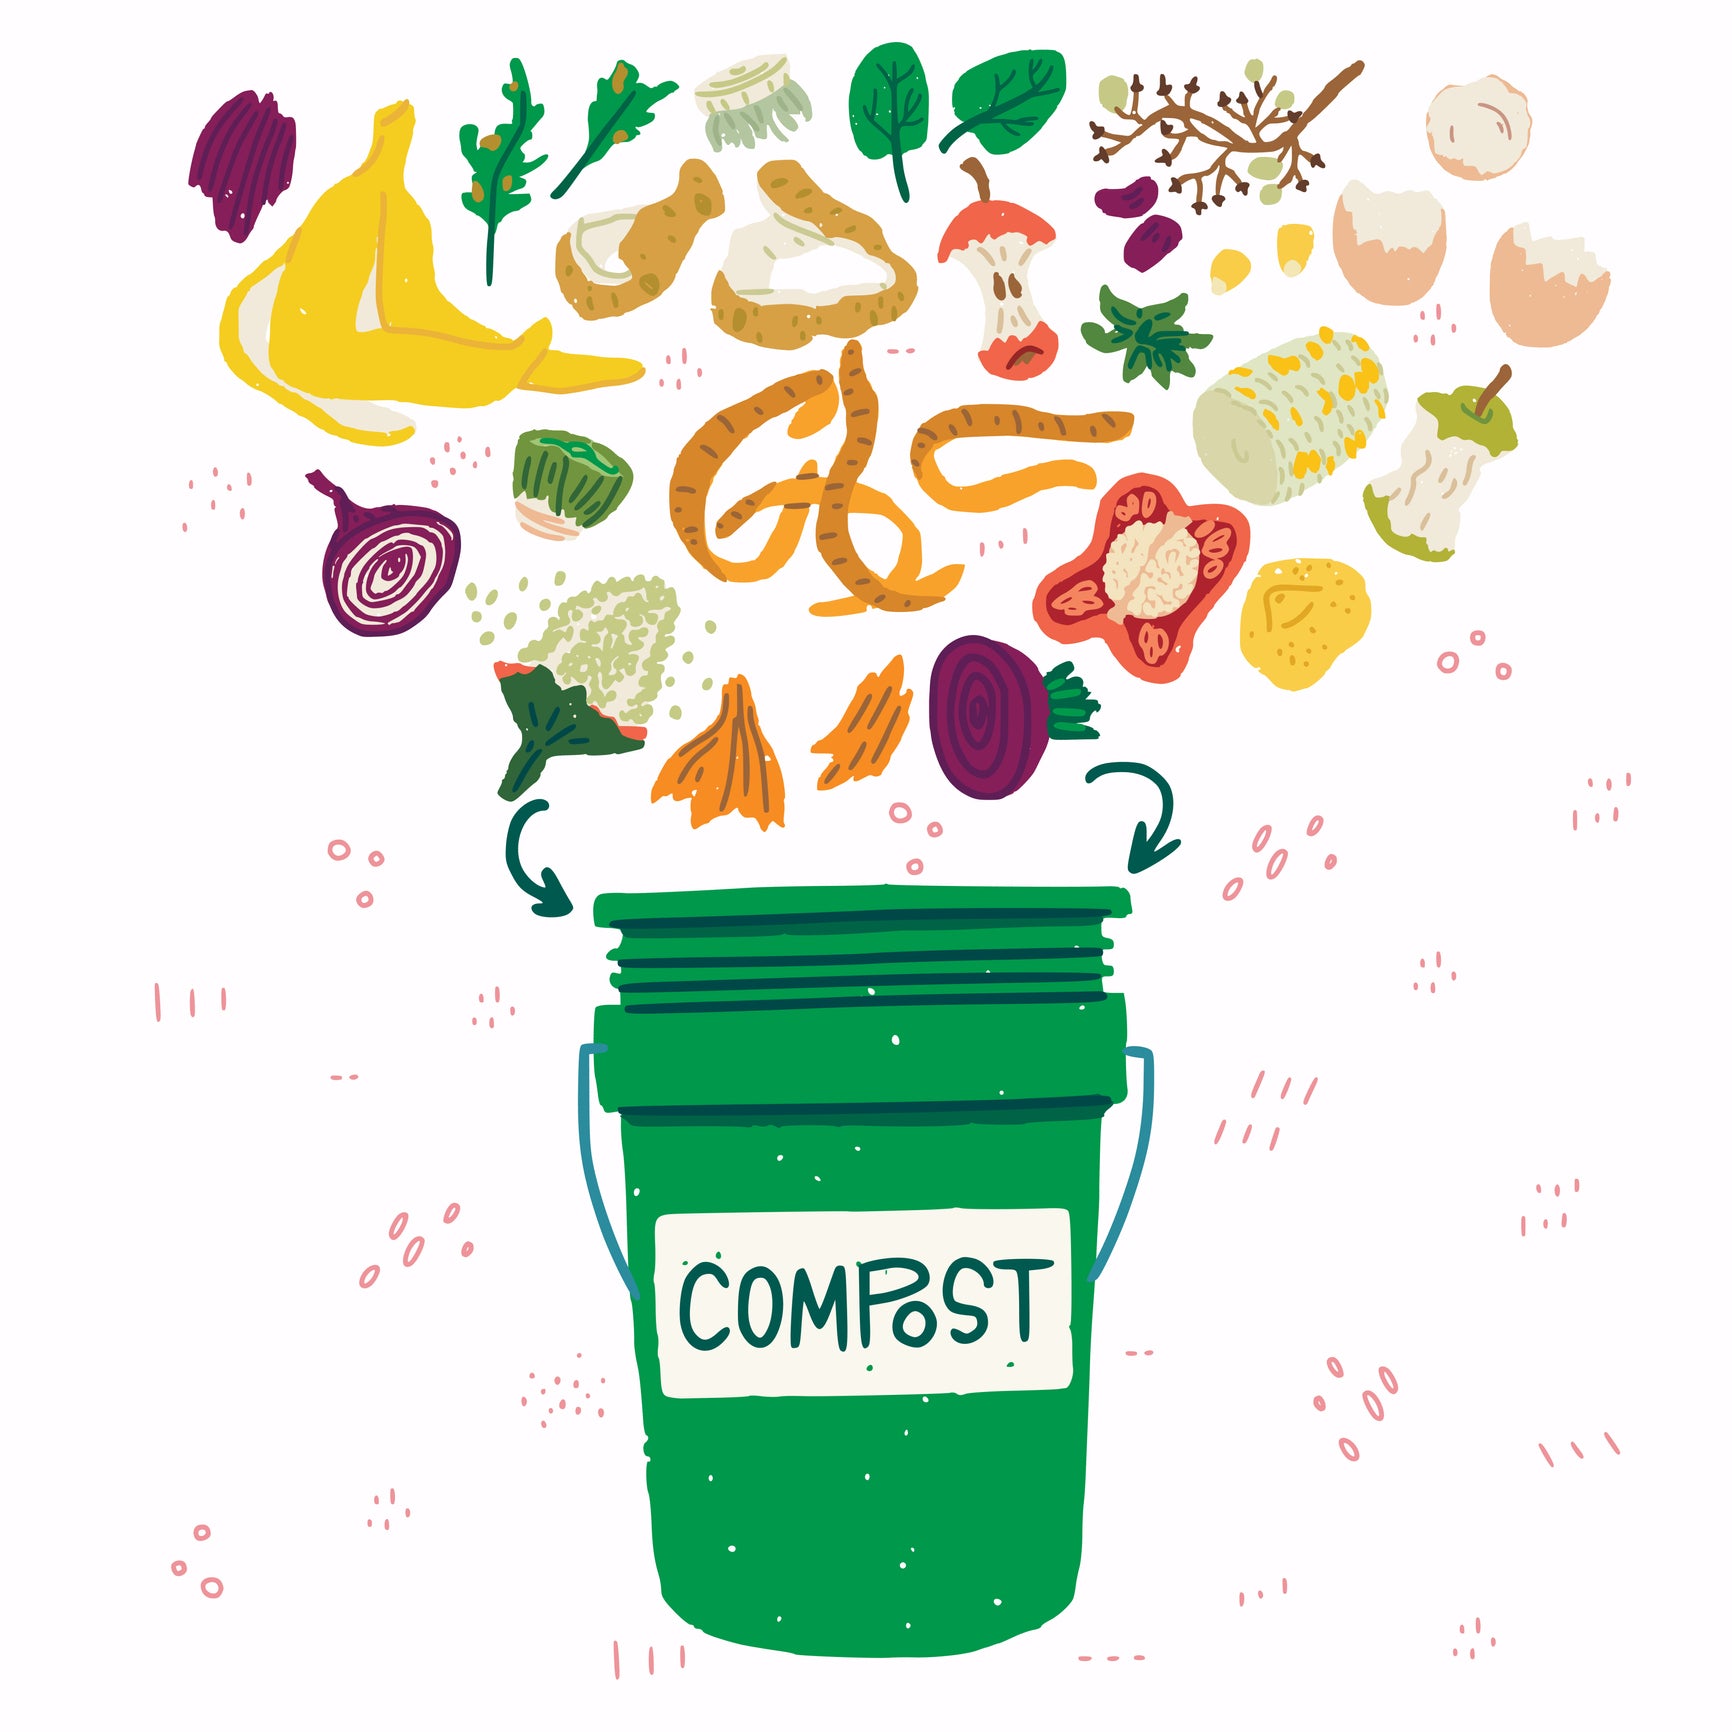 Reducing Food Waste by Composting in 5 Easy Steps